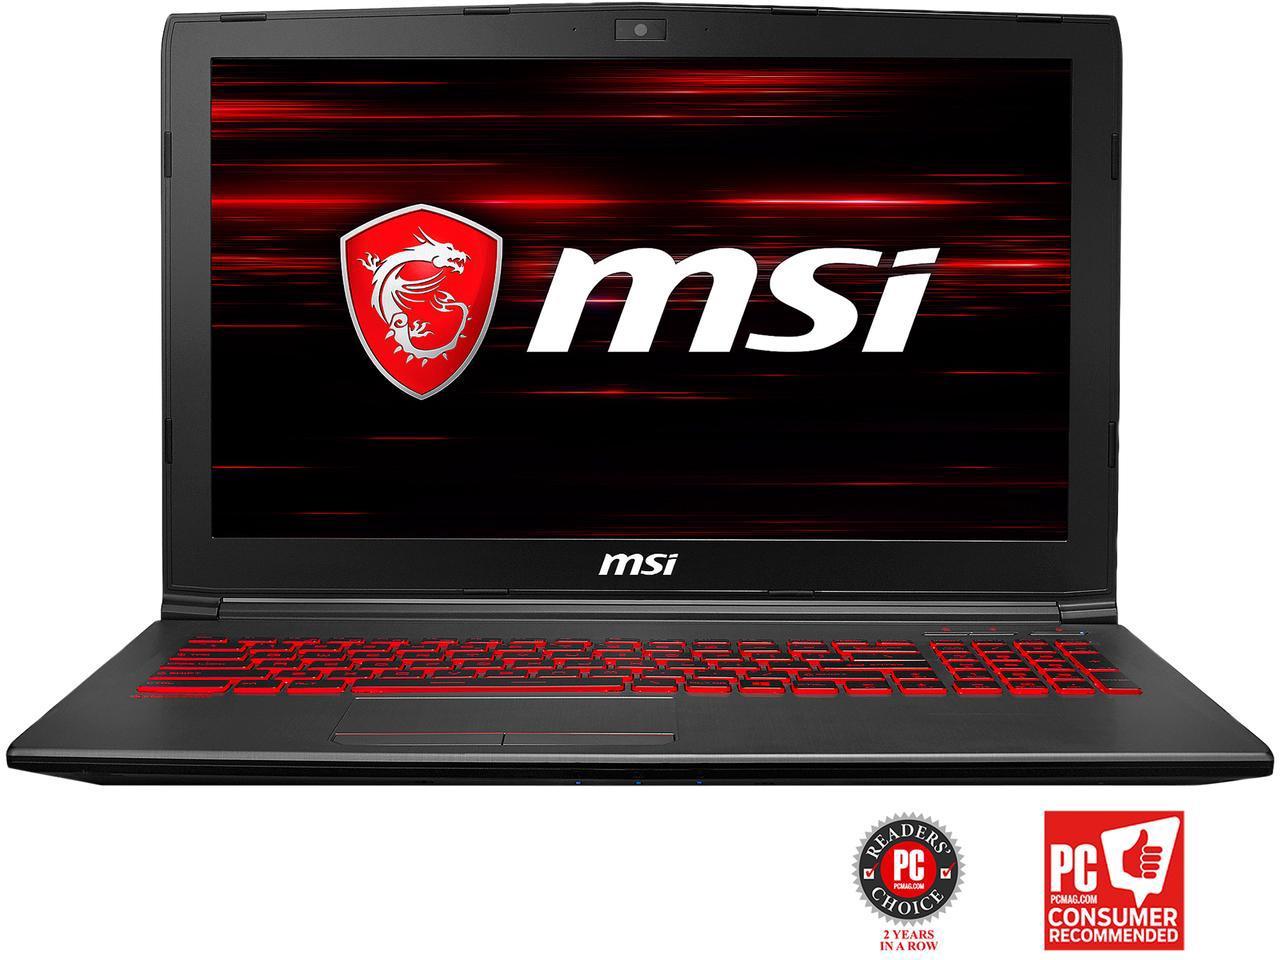 15 6 MSI GV62 Laptop With 8th Gen Intel Core I7 NVIDIA GeForce GTX 